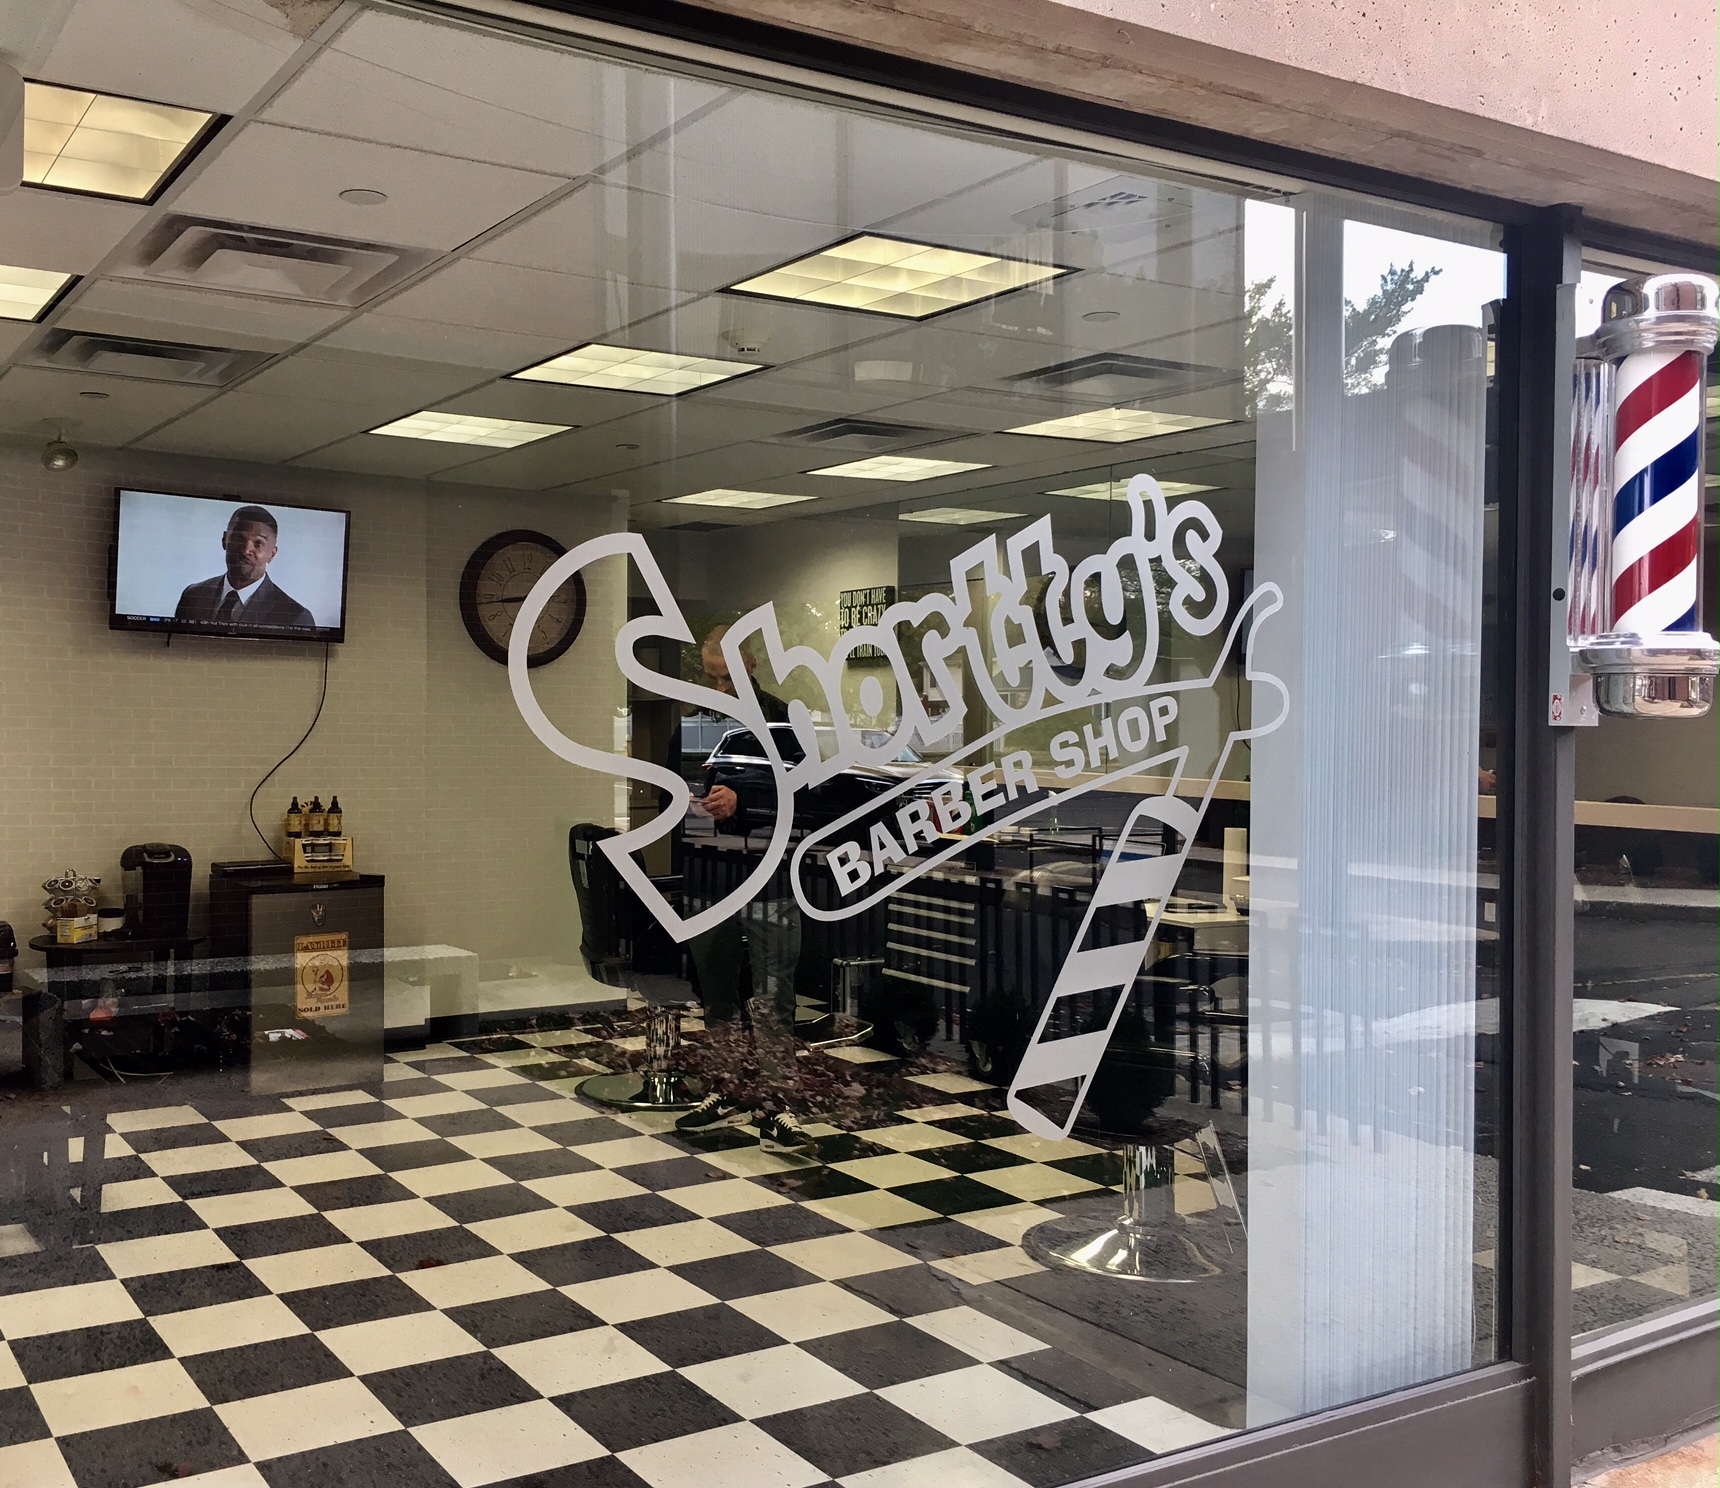 Shortty's Barber Shop